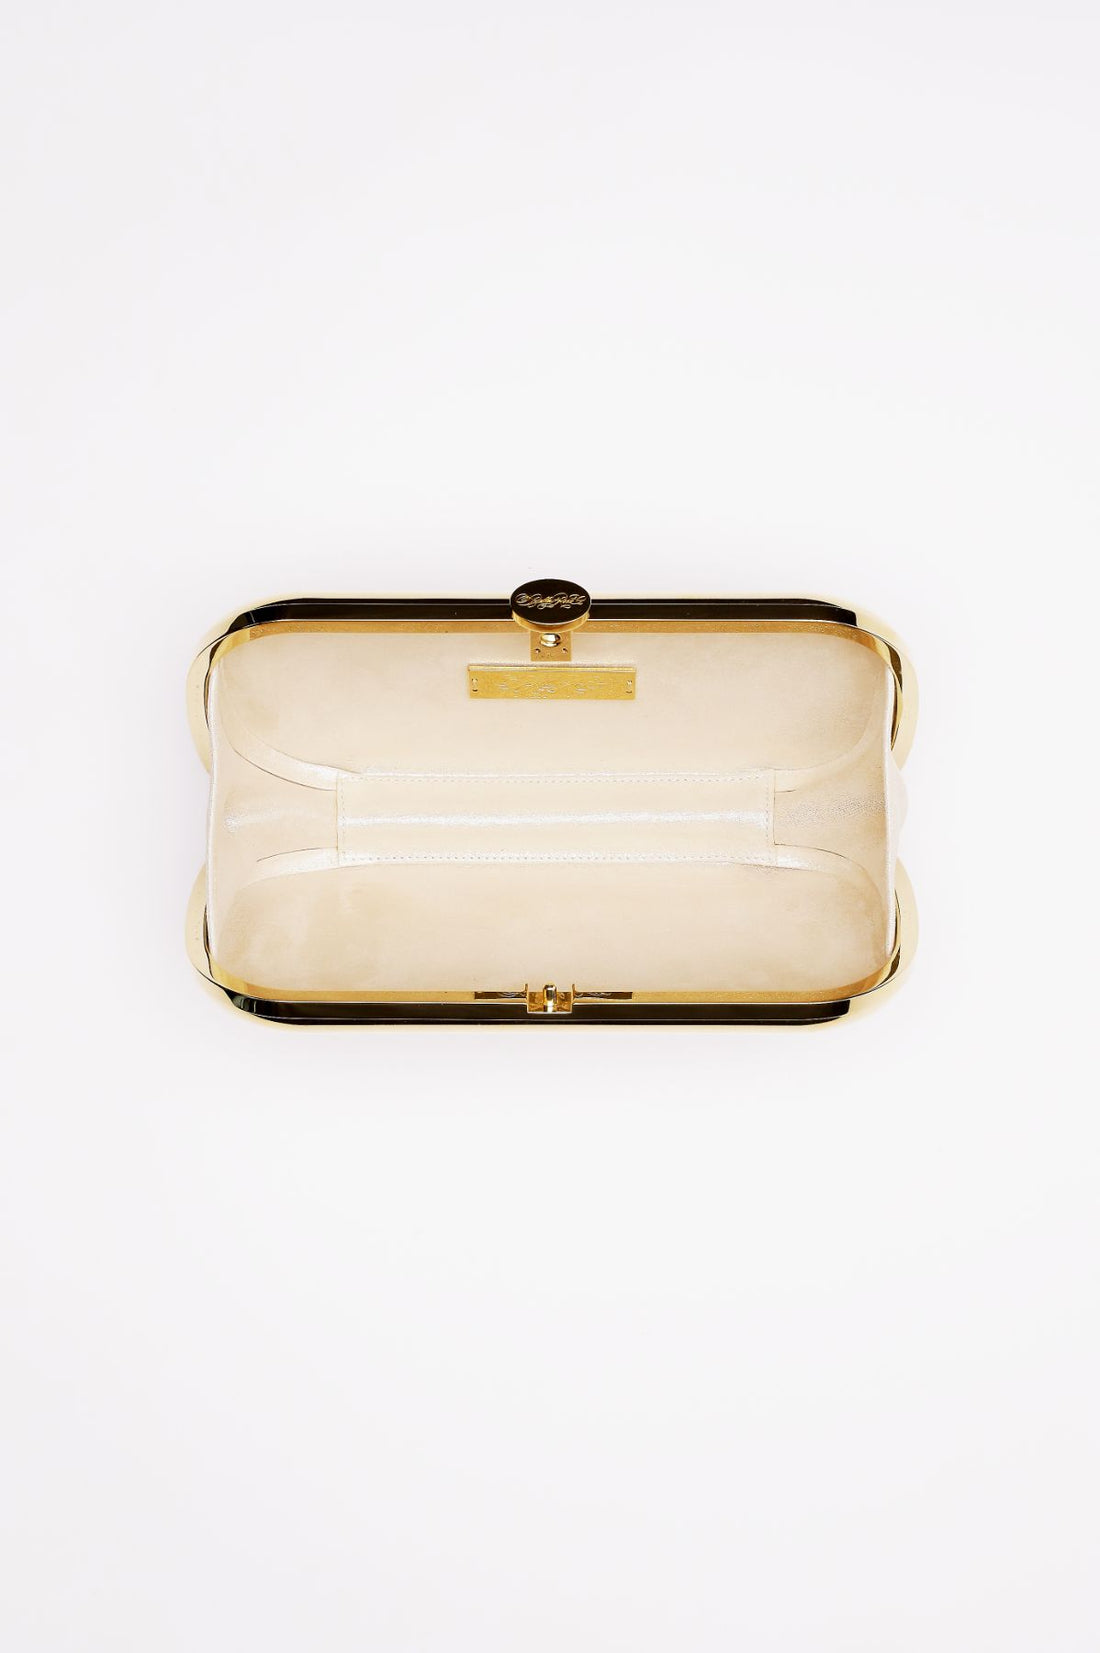 KARL LAGERFELD PARIS Rose Textured Tote White/Ivory/Gold Purse Handbag RARE  | eBay